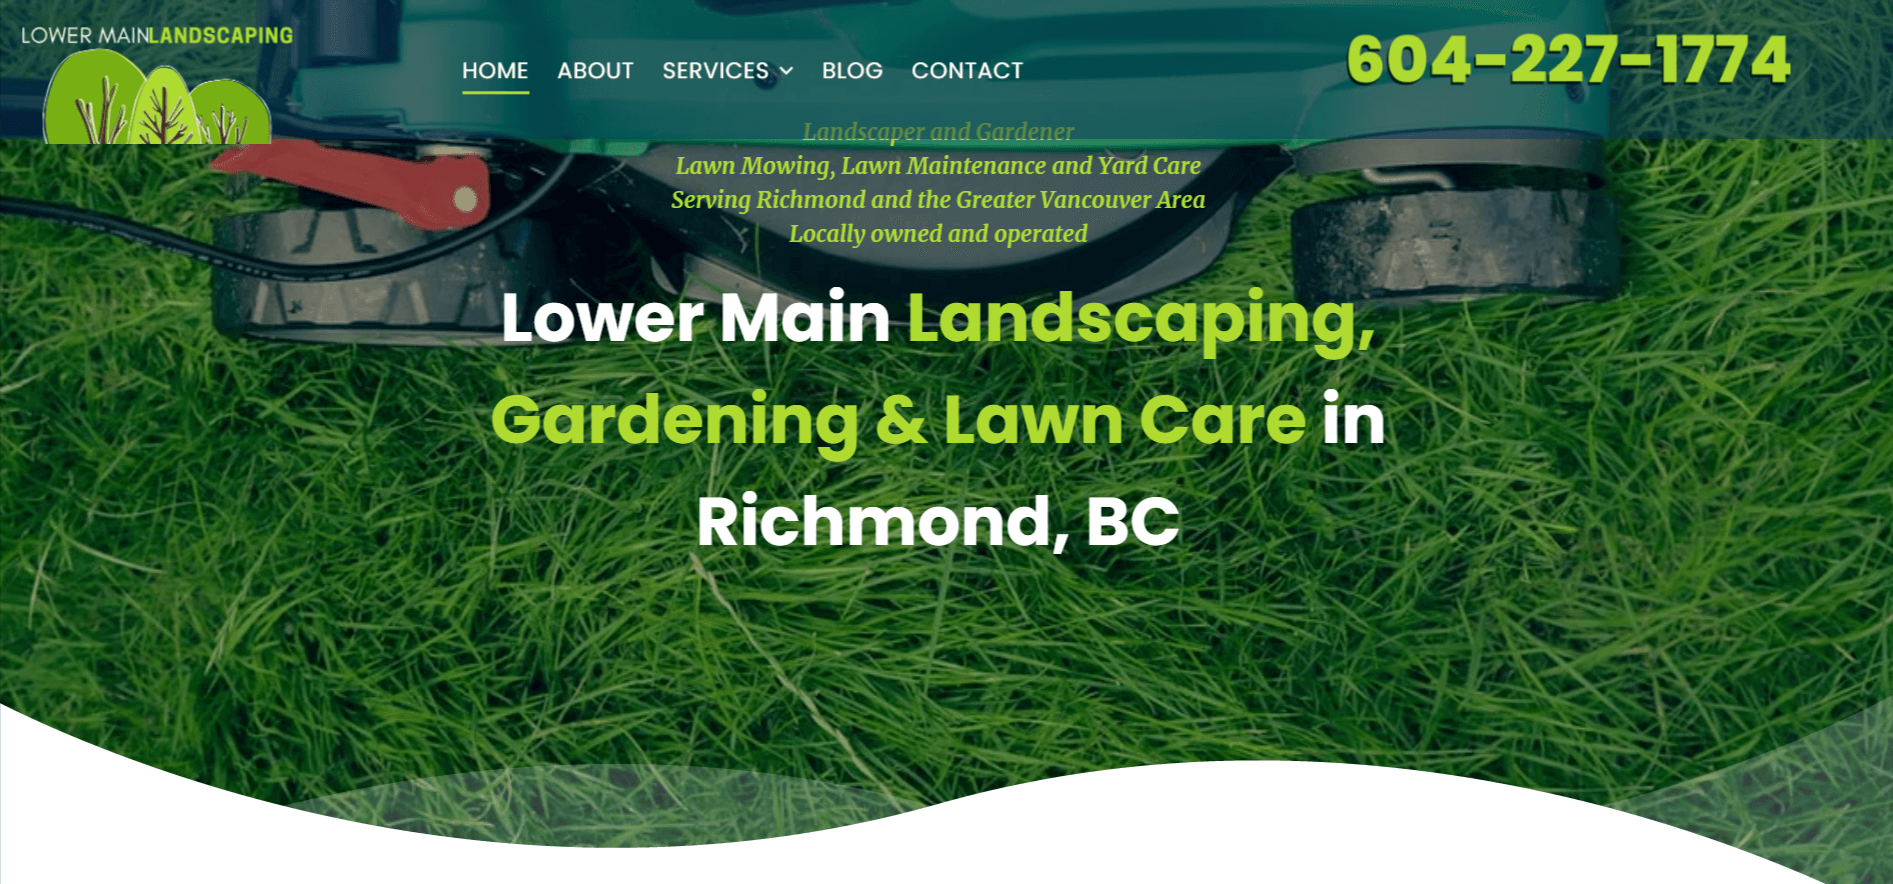 Landscaping Lead Generation Website